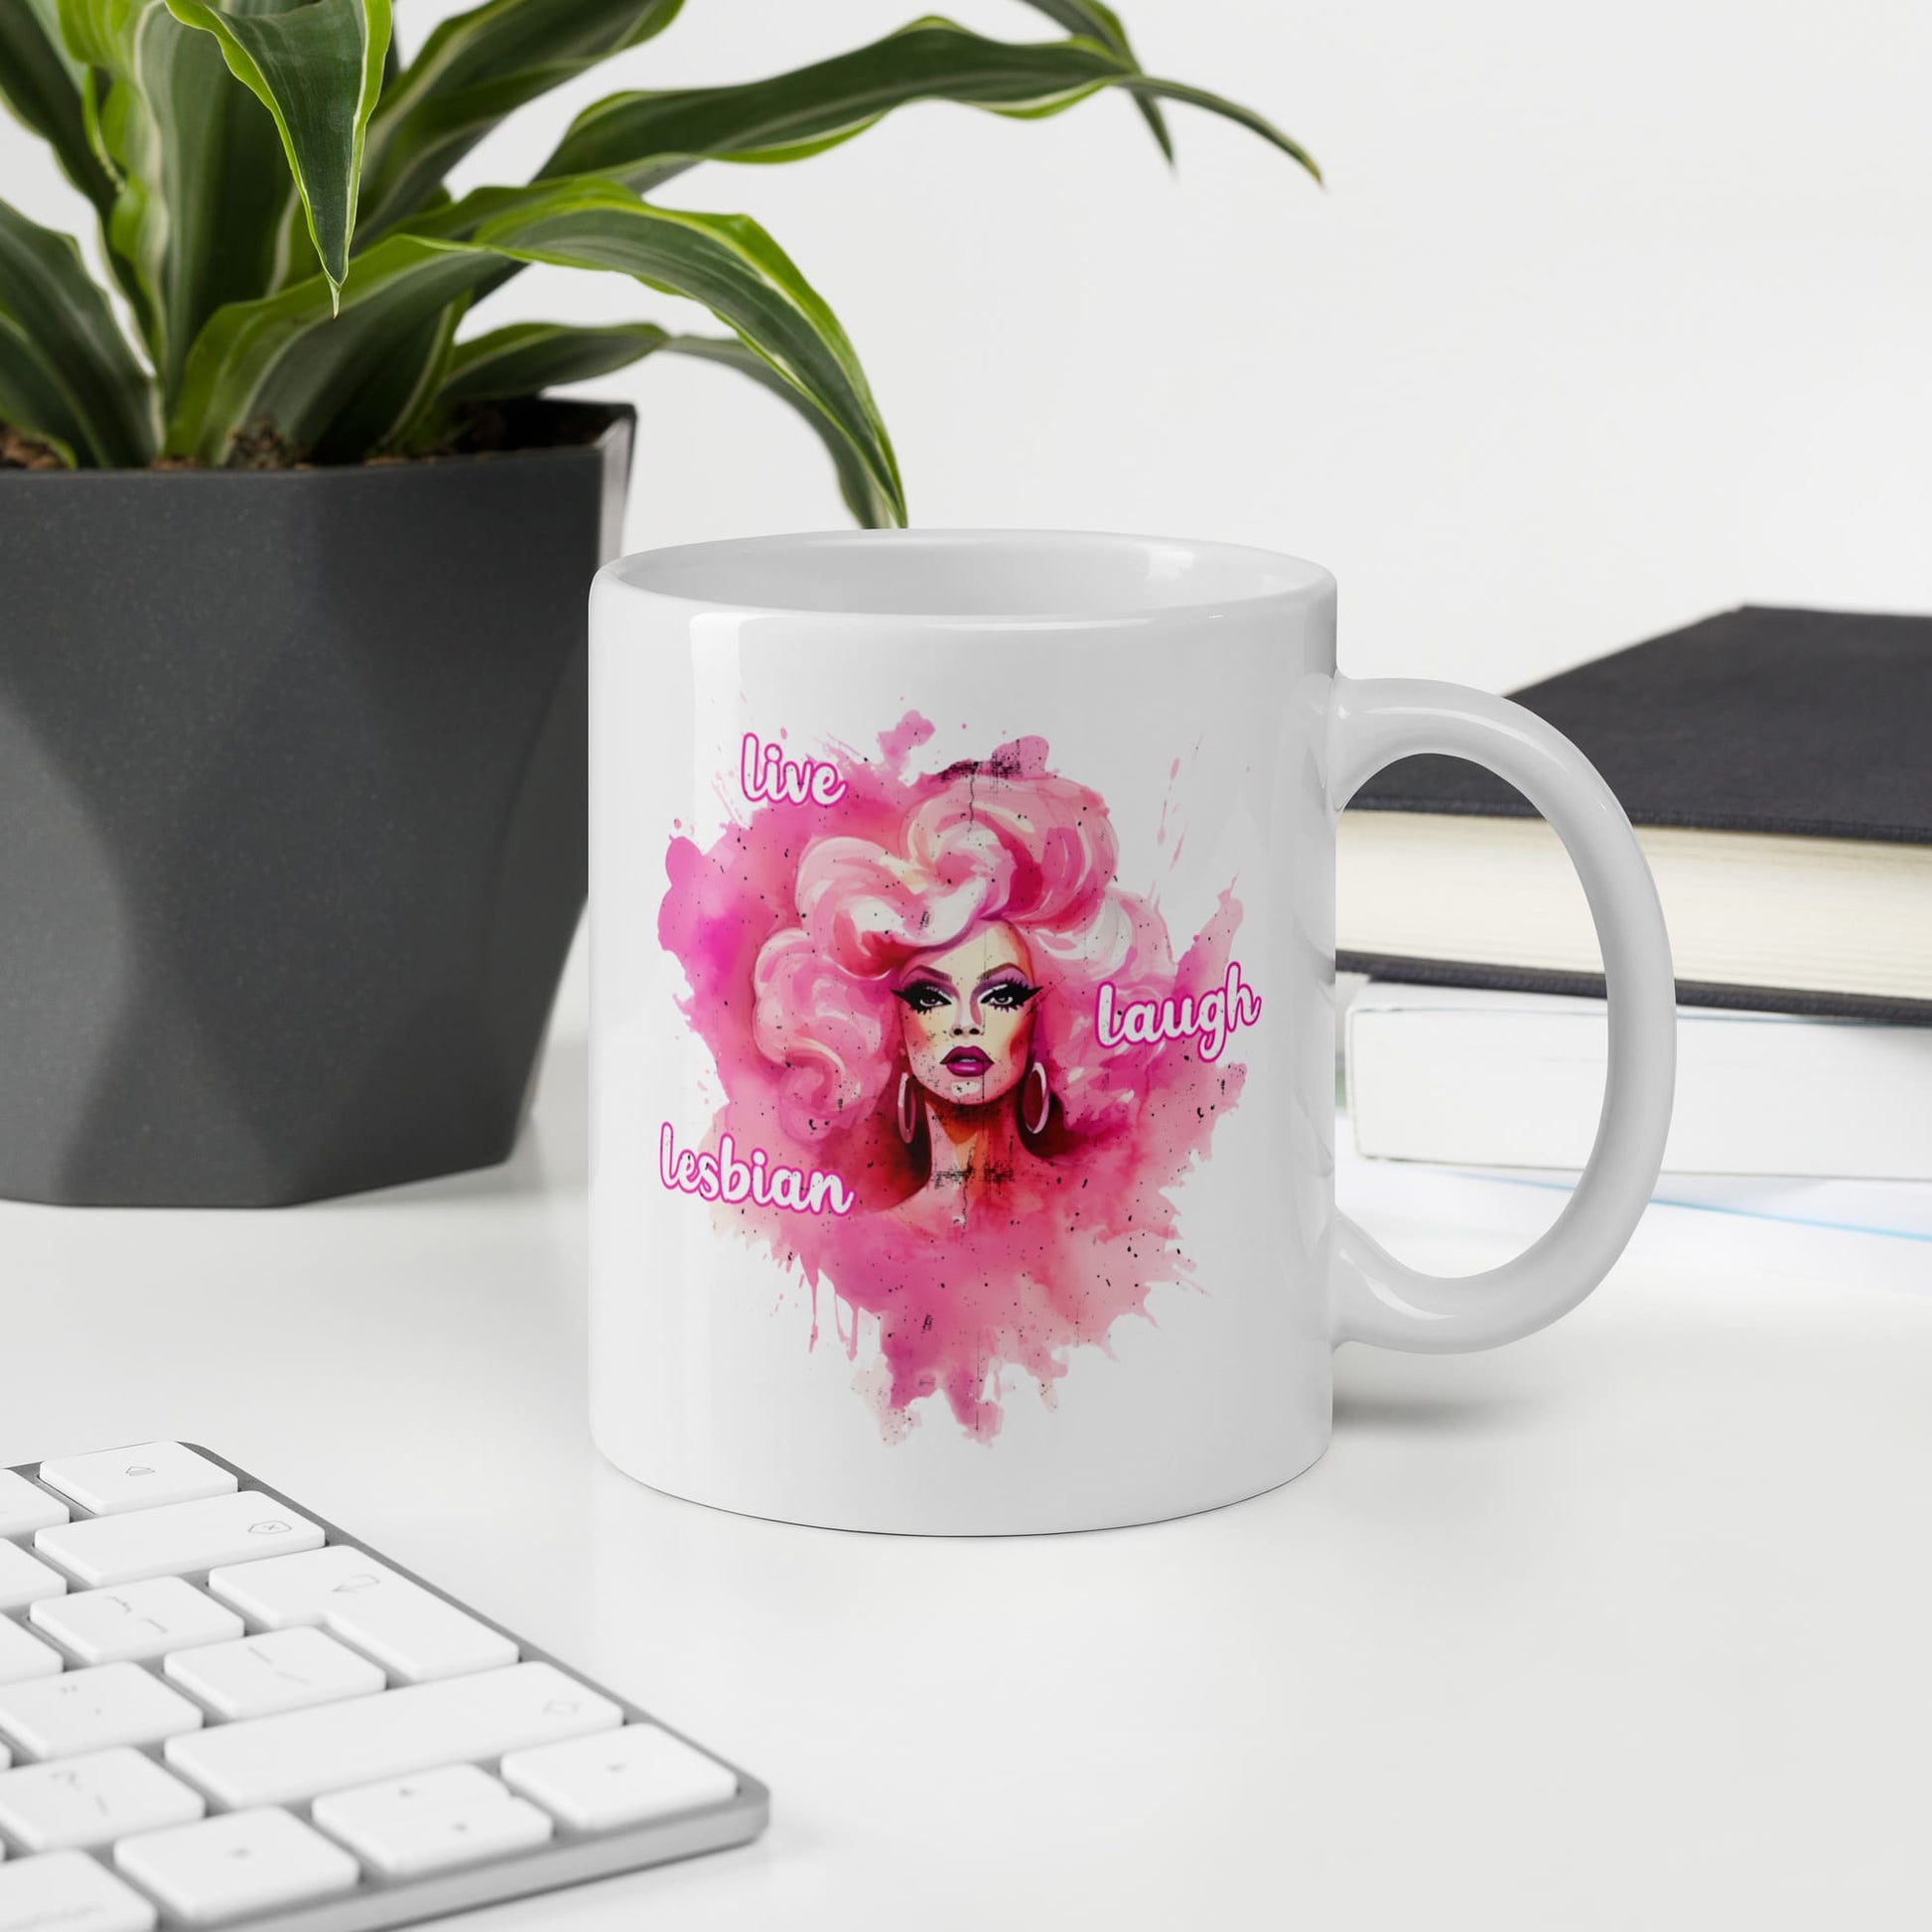 live laugh lesbian coffee or tea mug on desk